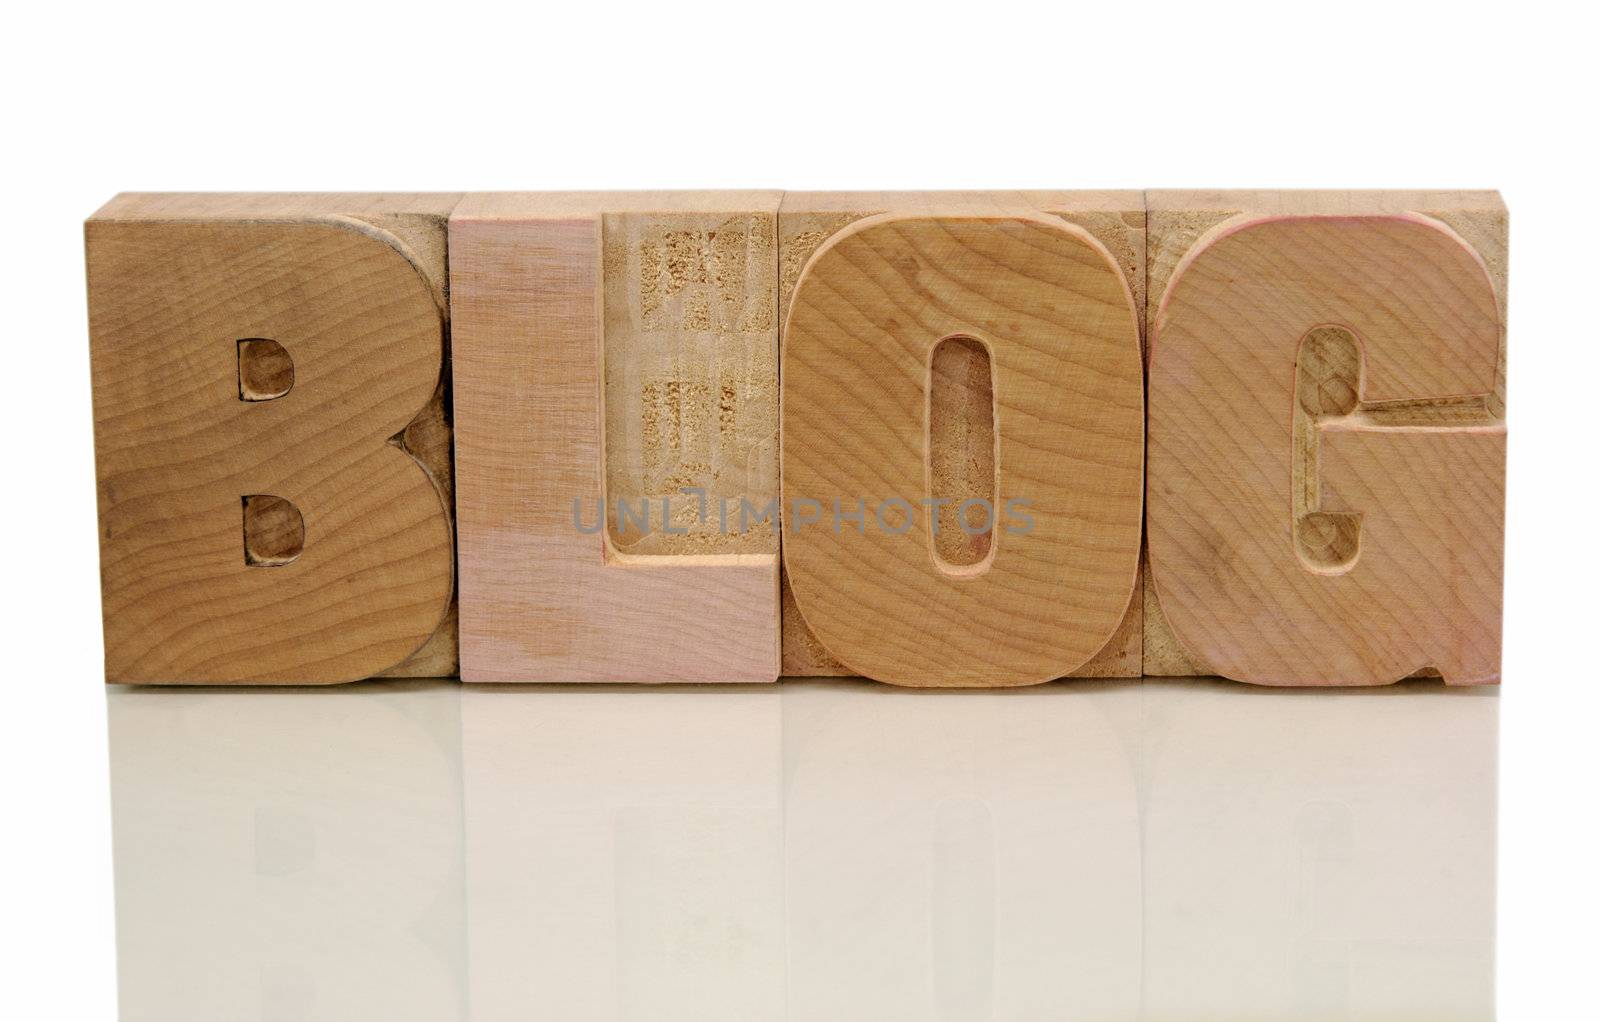 blog in letterpress wood type by nebari